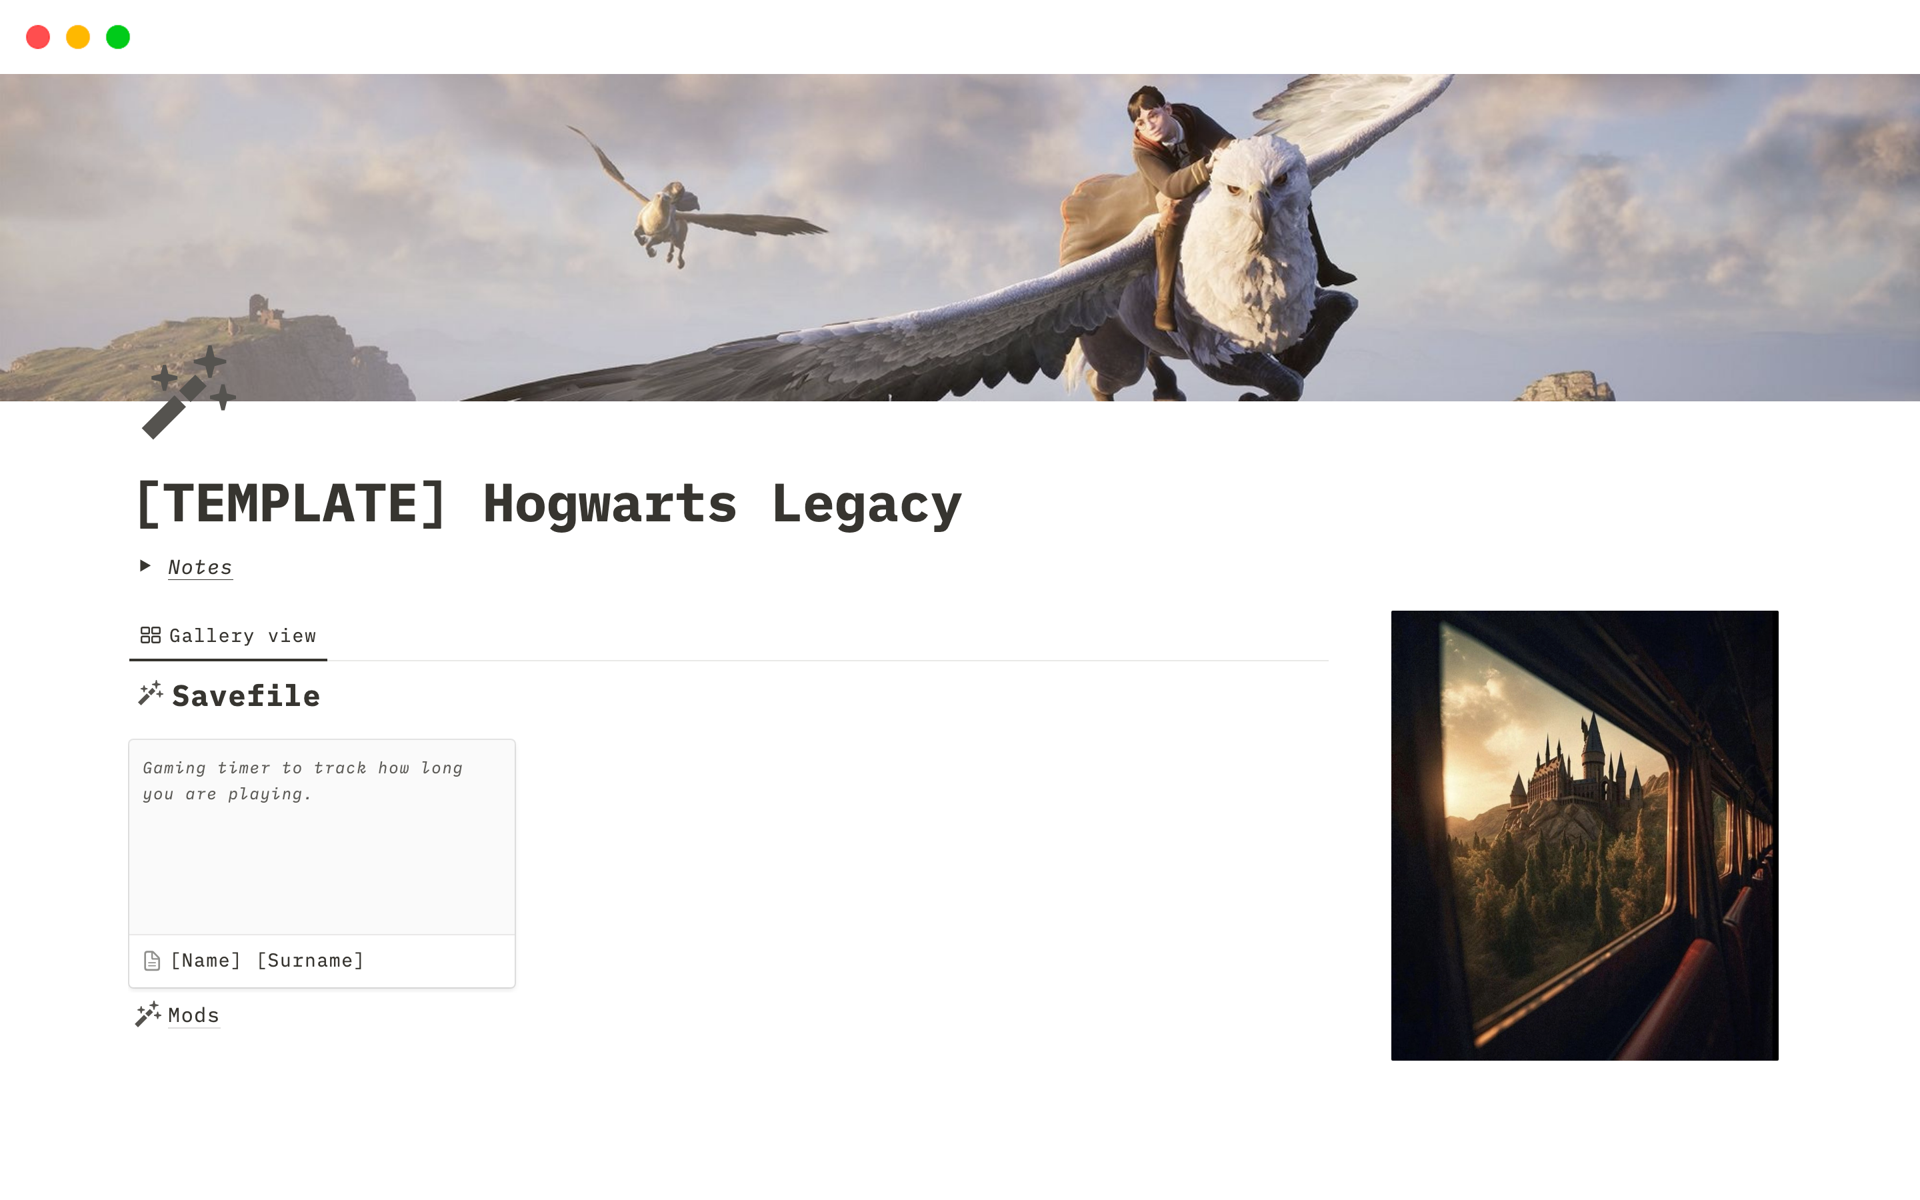 Vista previa de plantilla para Hogwarts Legacy